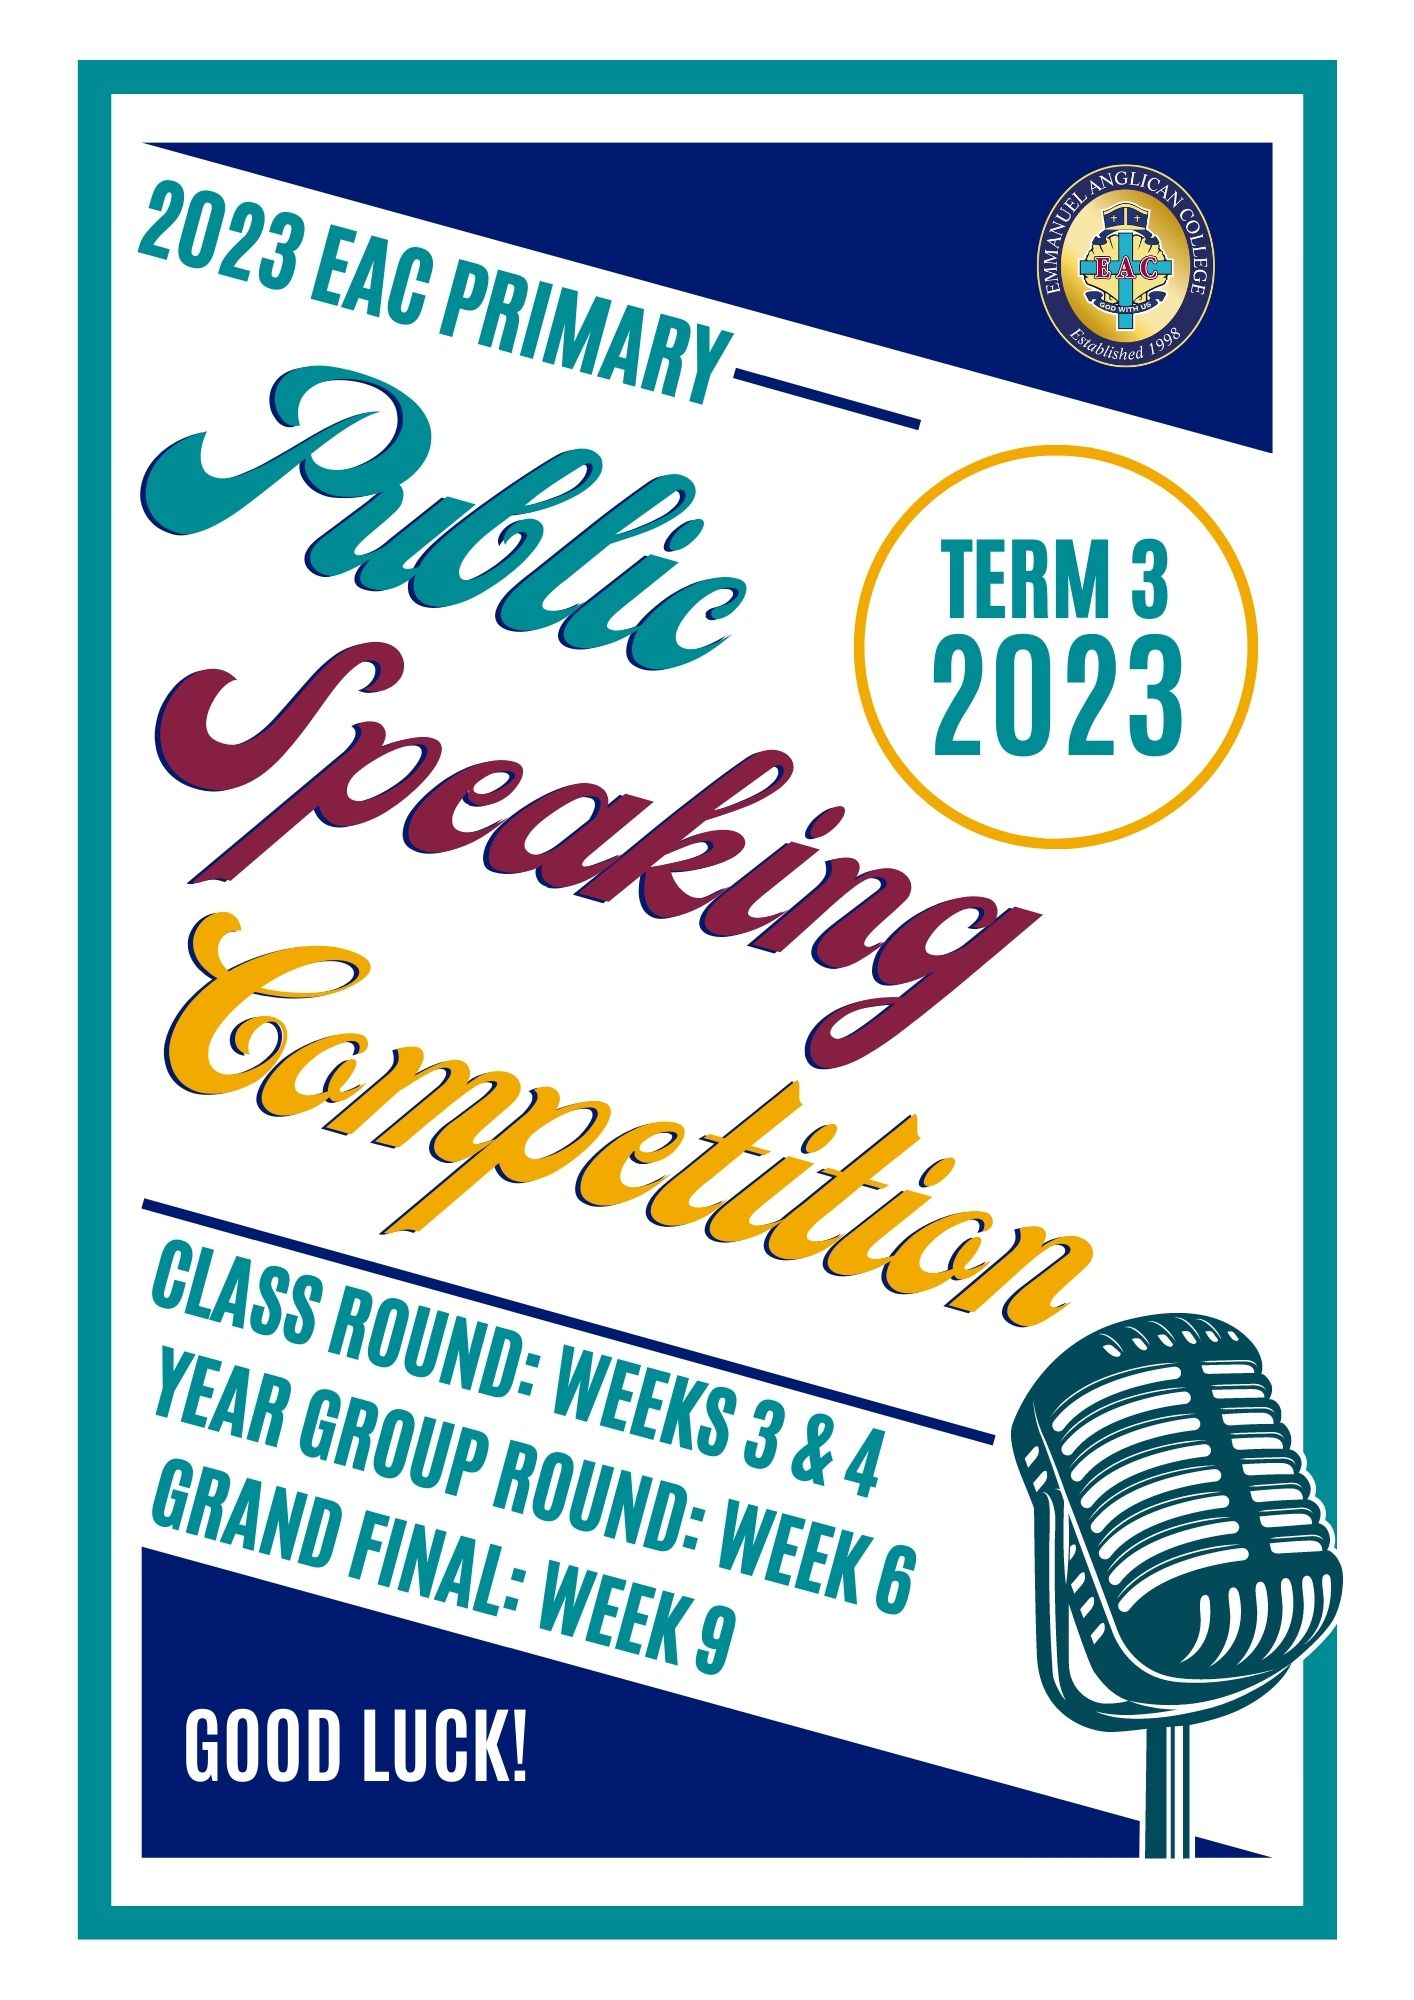 Primary Public Speaking Competition